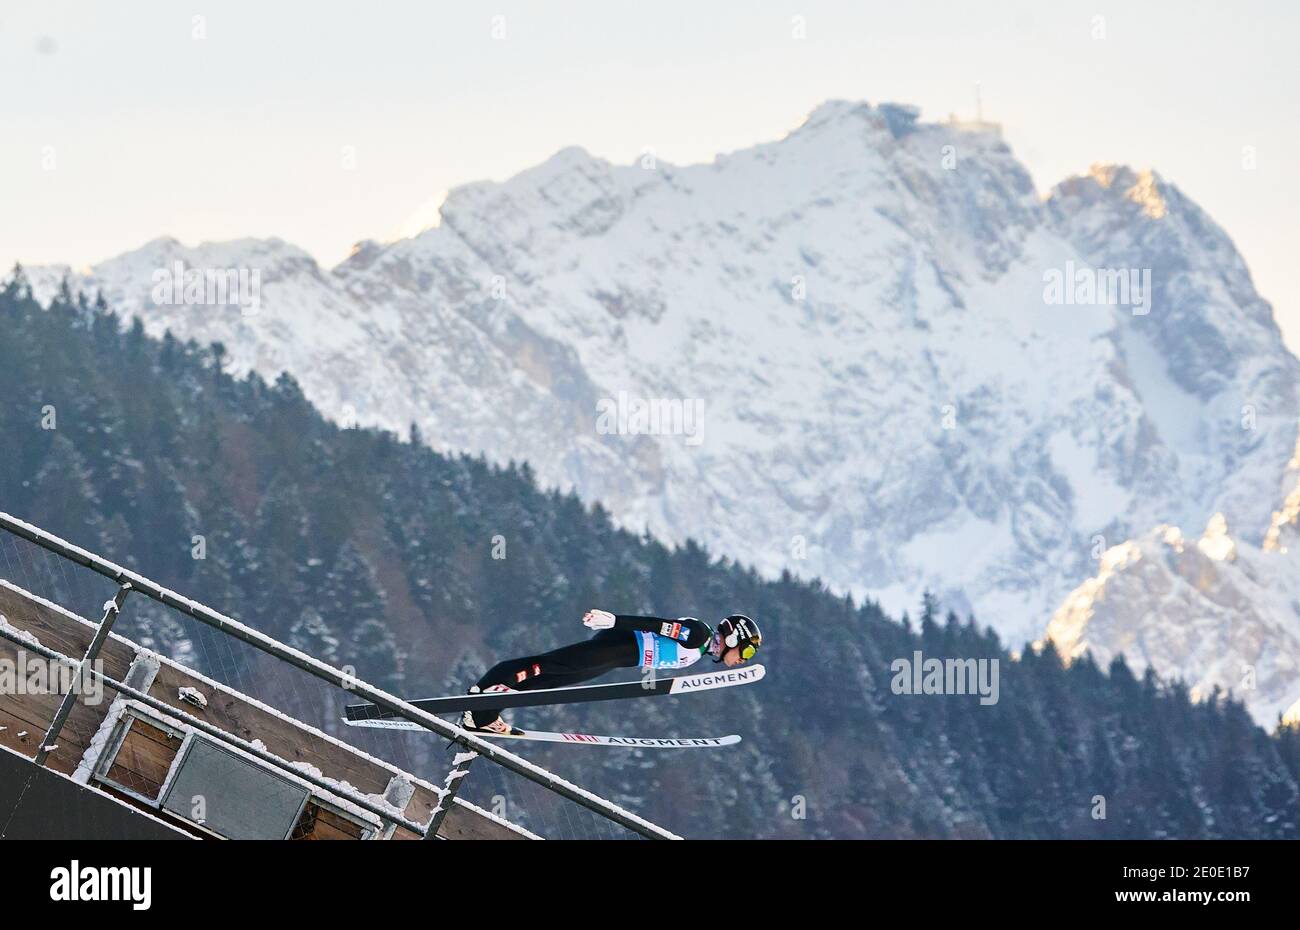 Markus SCHIFFNER, AUT in action in front of Zugspitze mountain at the Four Hills Tournament Ski Jumping at Olympic Stadium, Grosse Olympiaschanze in Garmisch-Partenkirchen, Bavaria, Germany, December 31, 2020.  © Peter Schatz / Alamy Live News Stock Photo